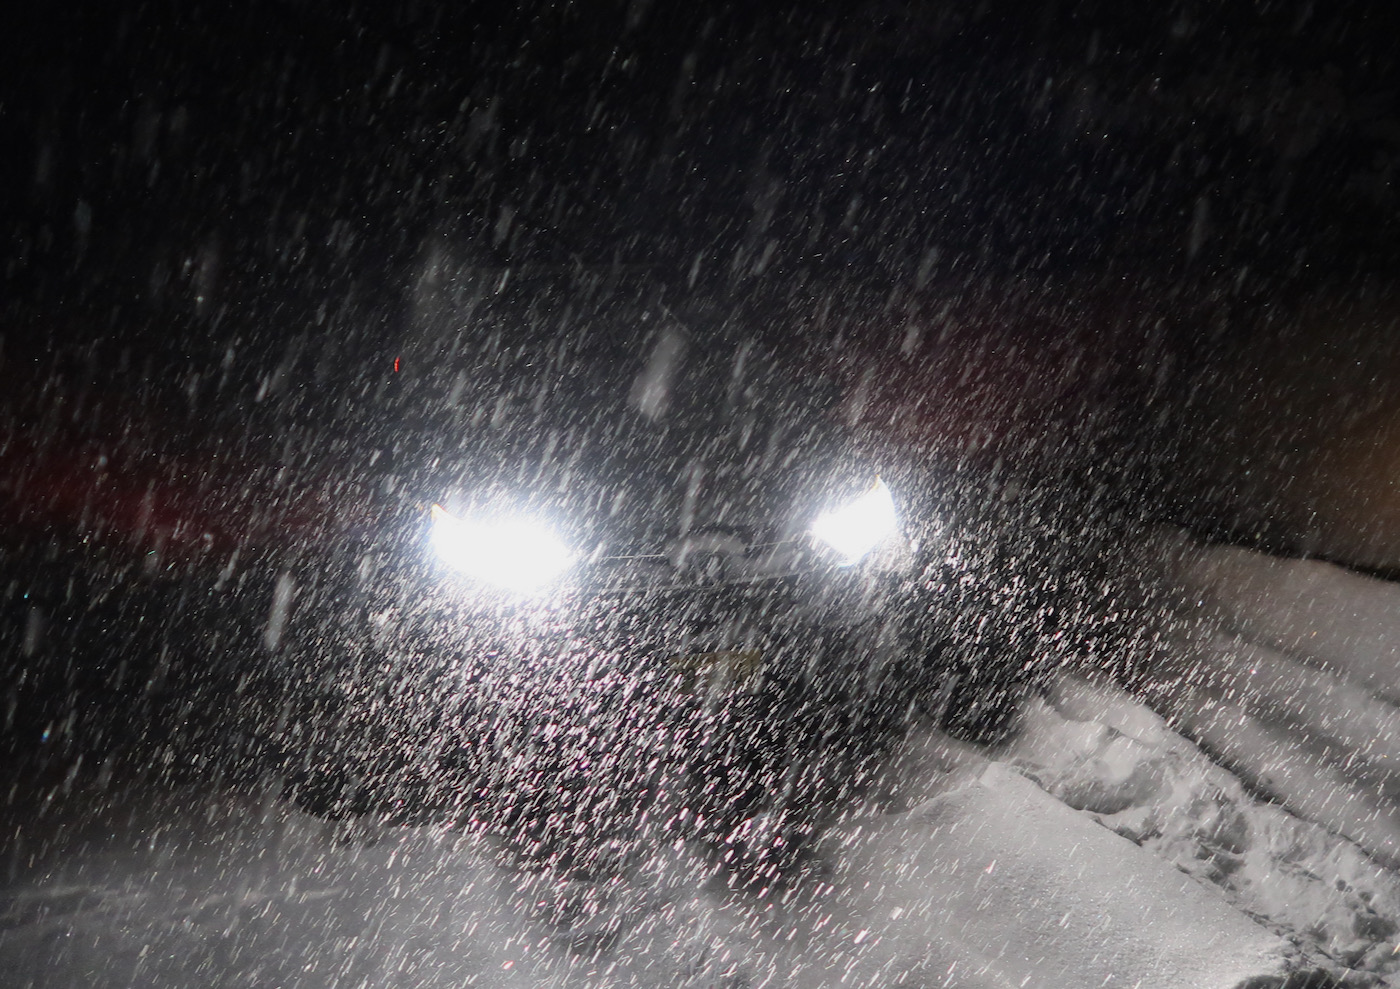 CRV in a snowstorm